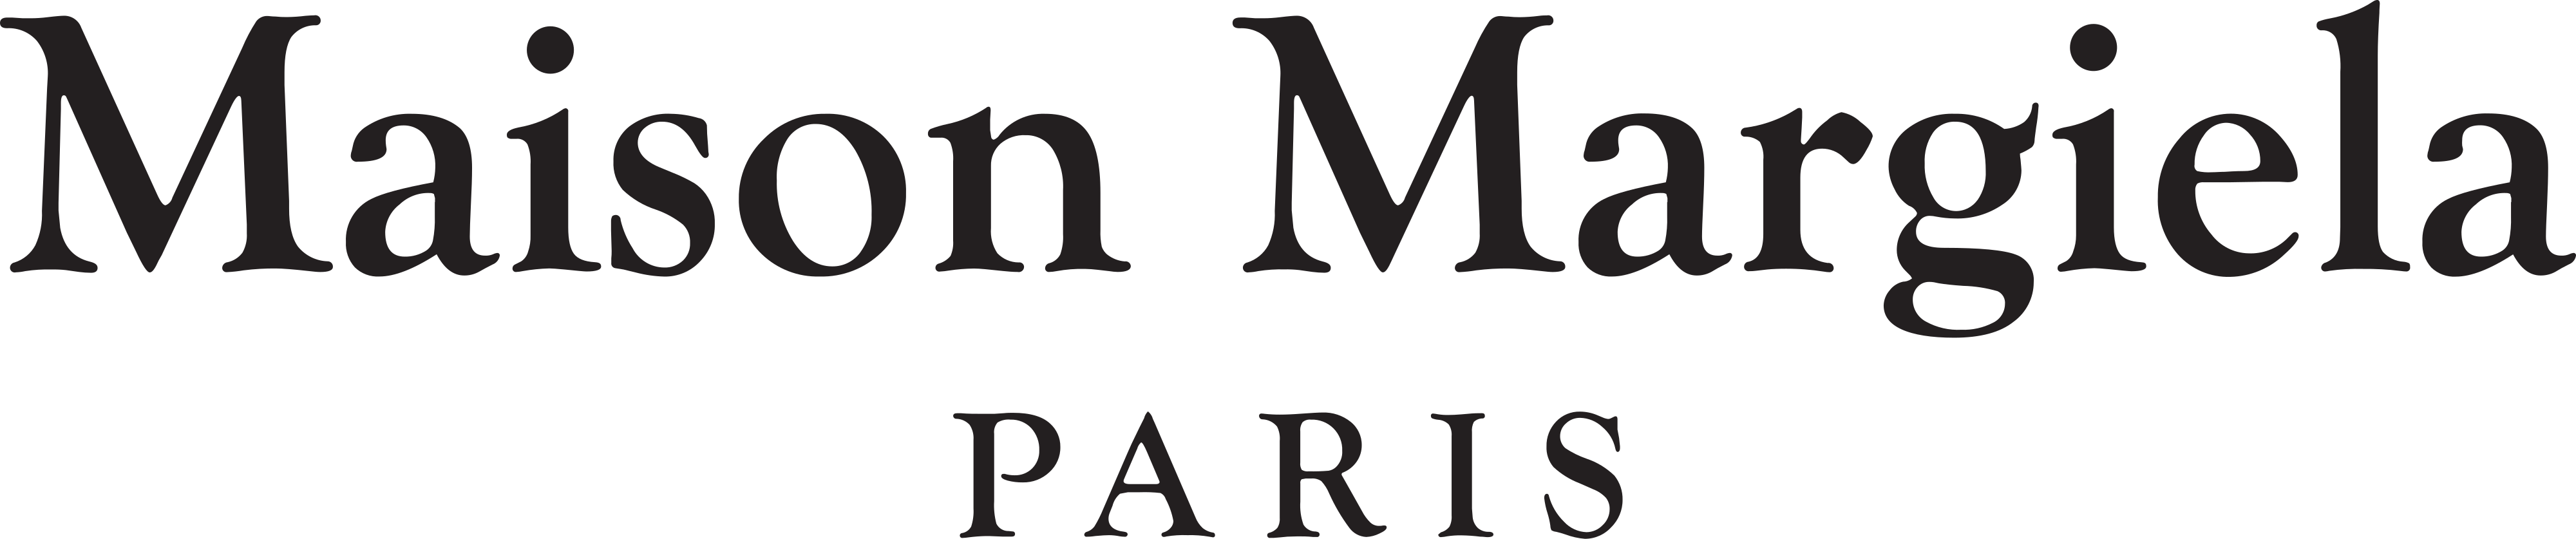 Maison Margiela logo - download.